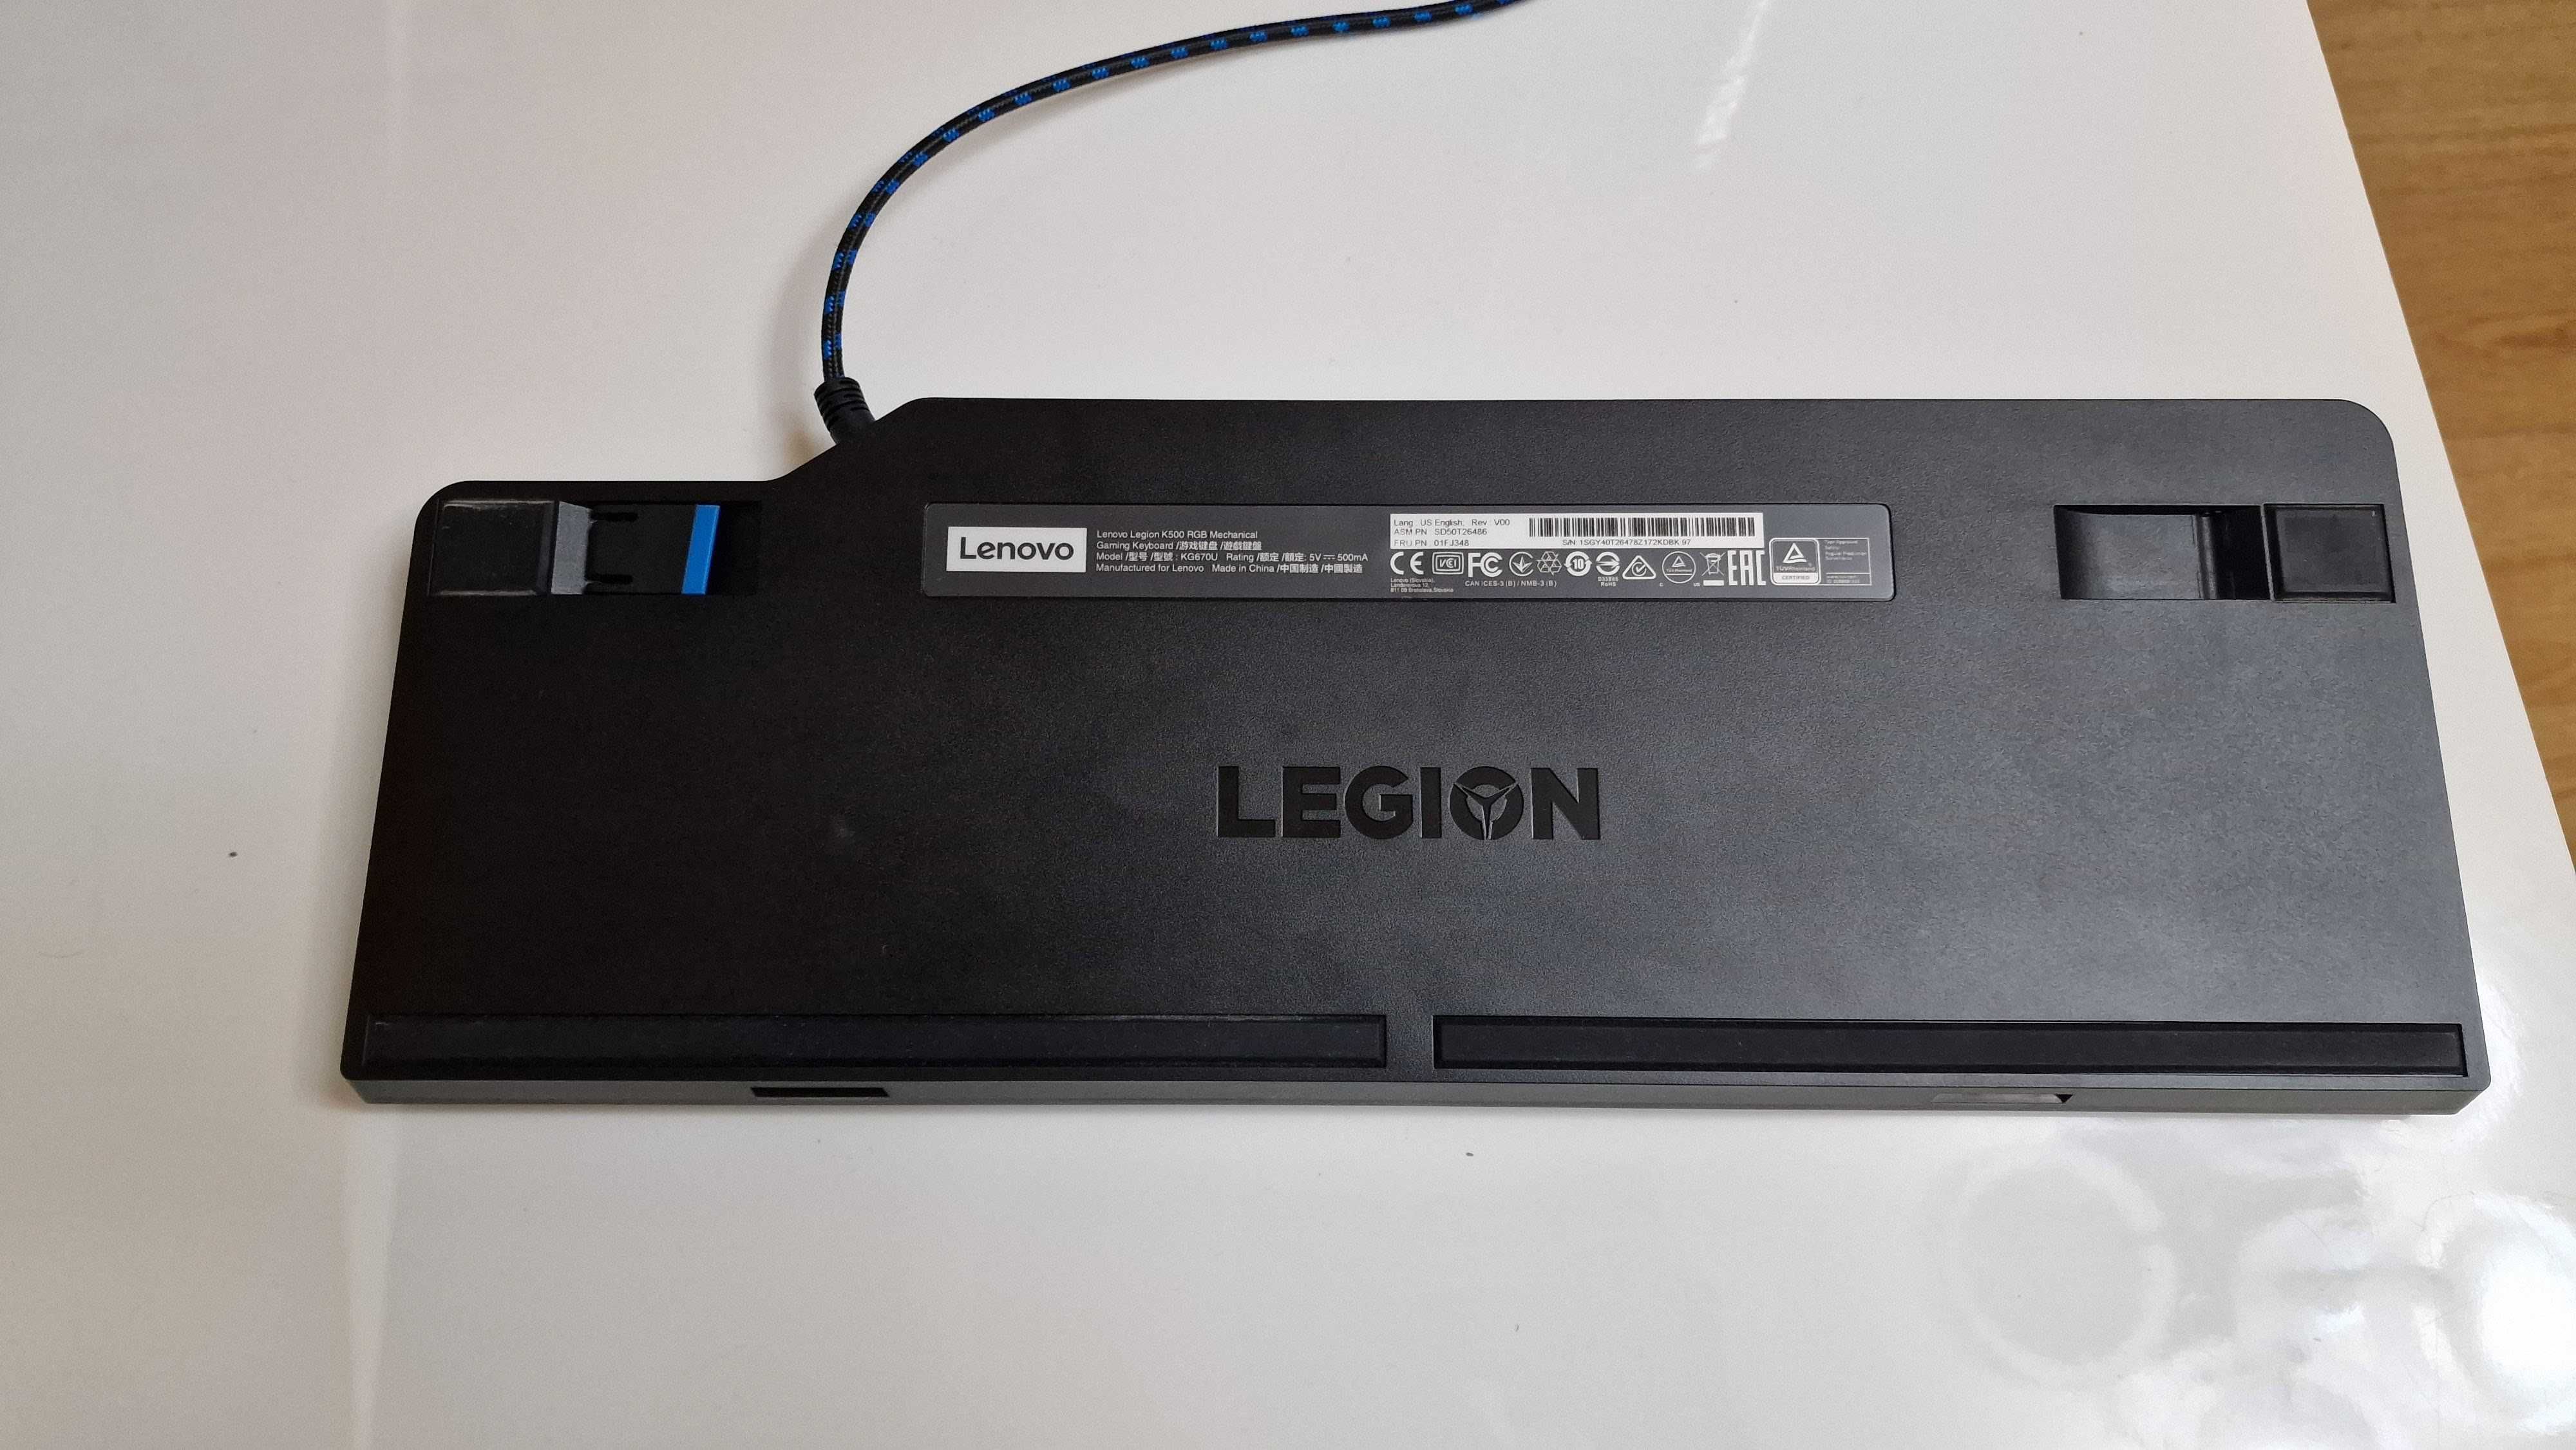 Tastatura Lenovo Legion K500 RGB mecanica.